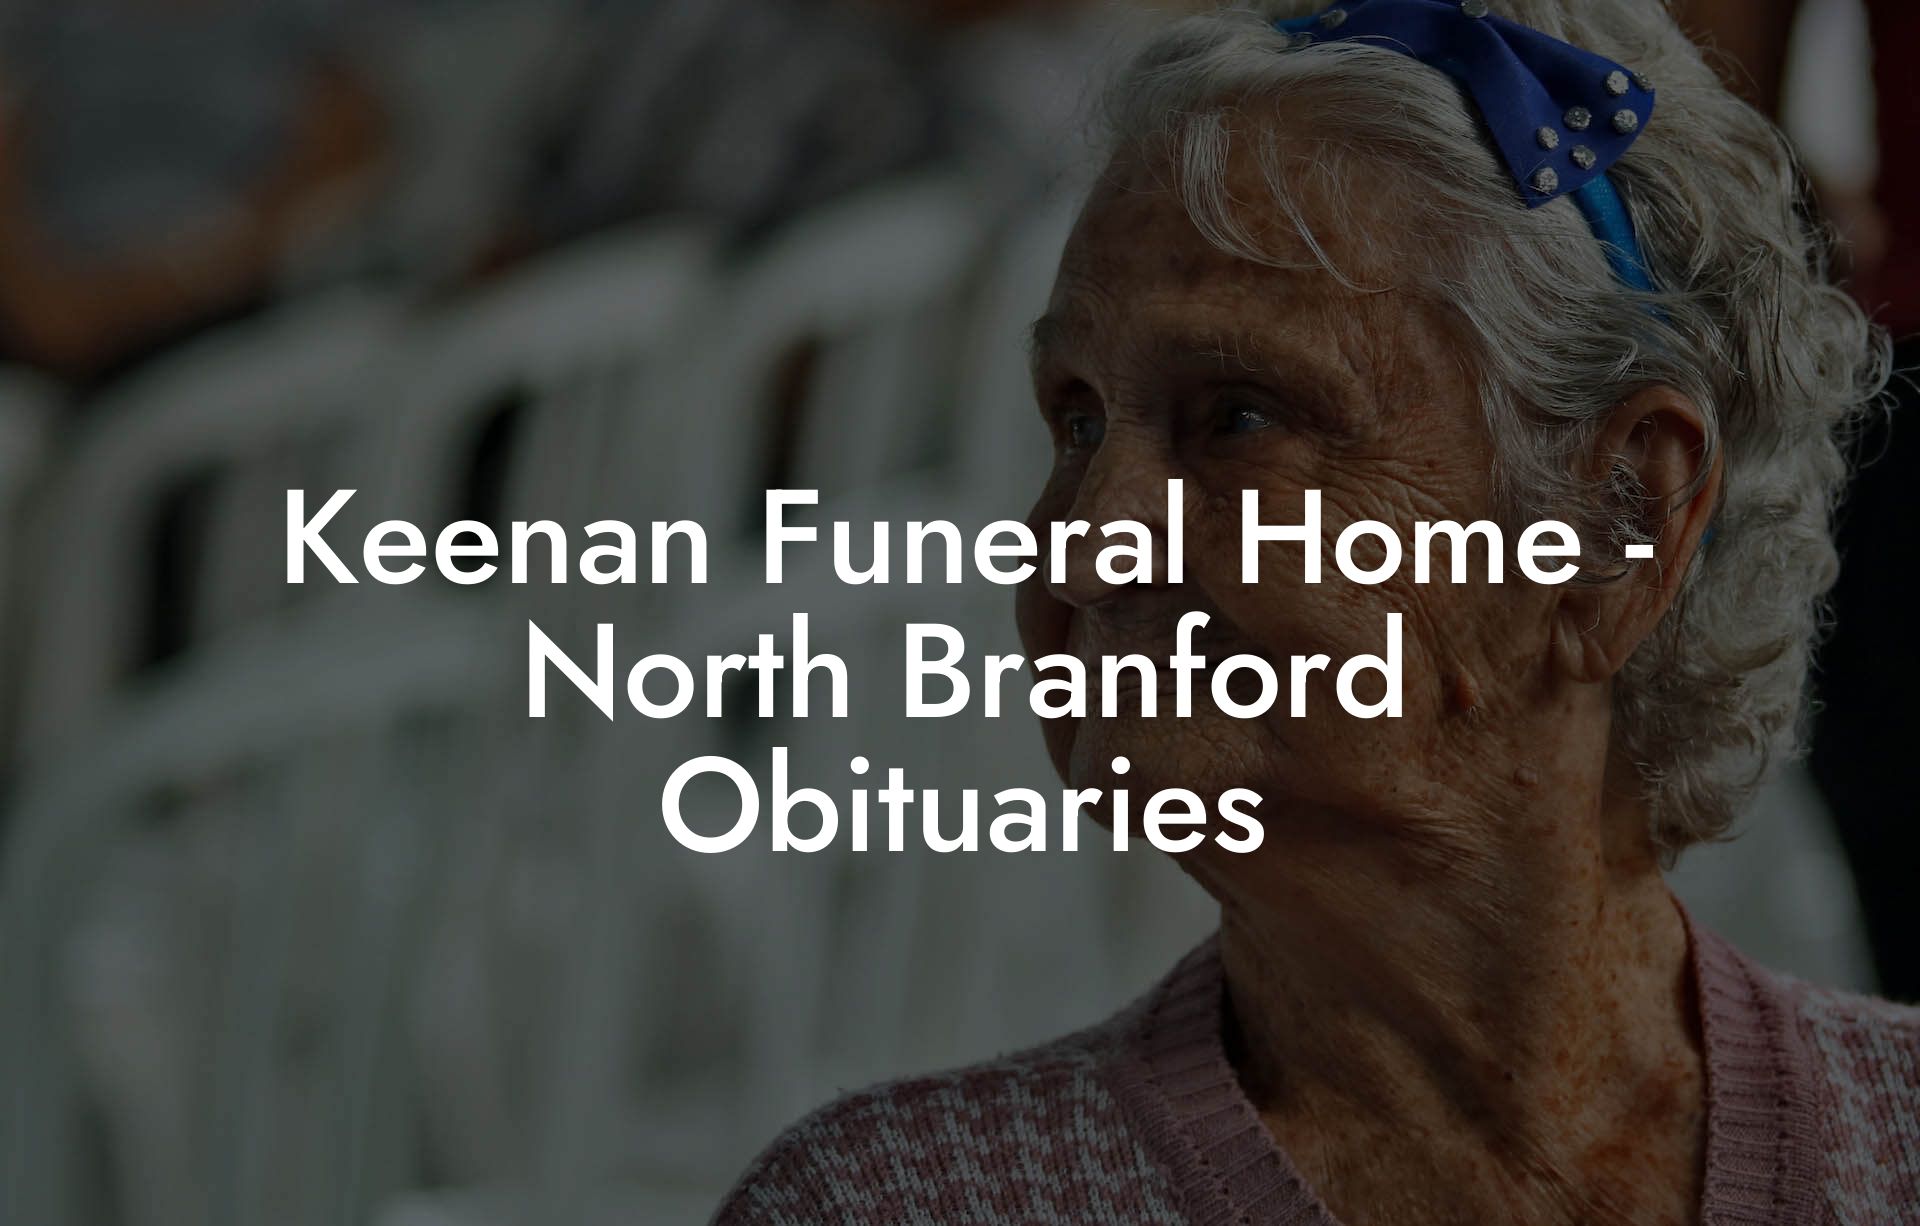 Keenan Funeral Home - North Branford Obituaries